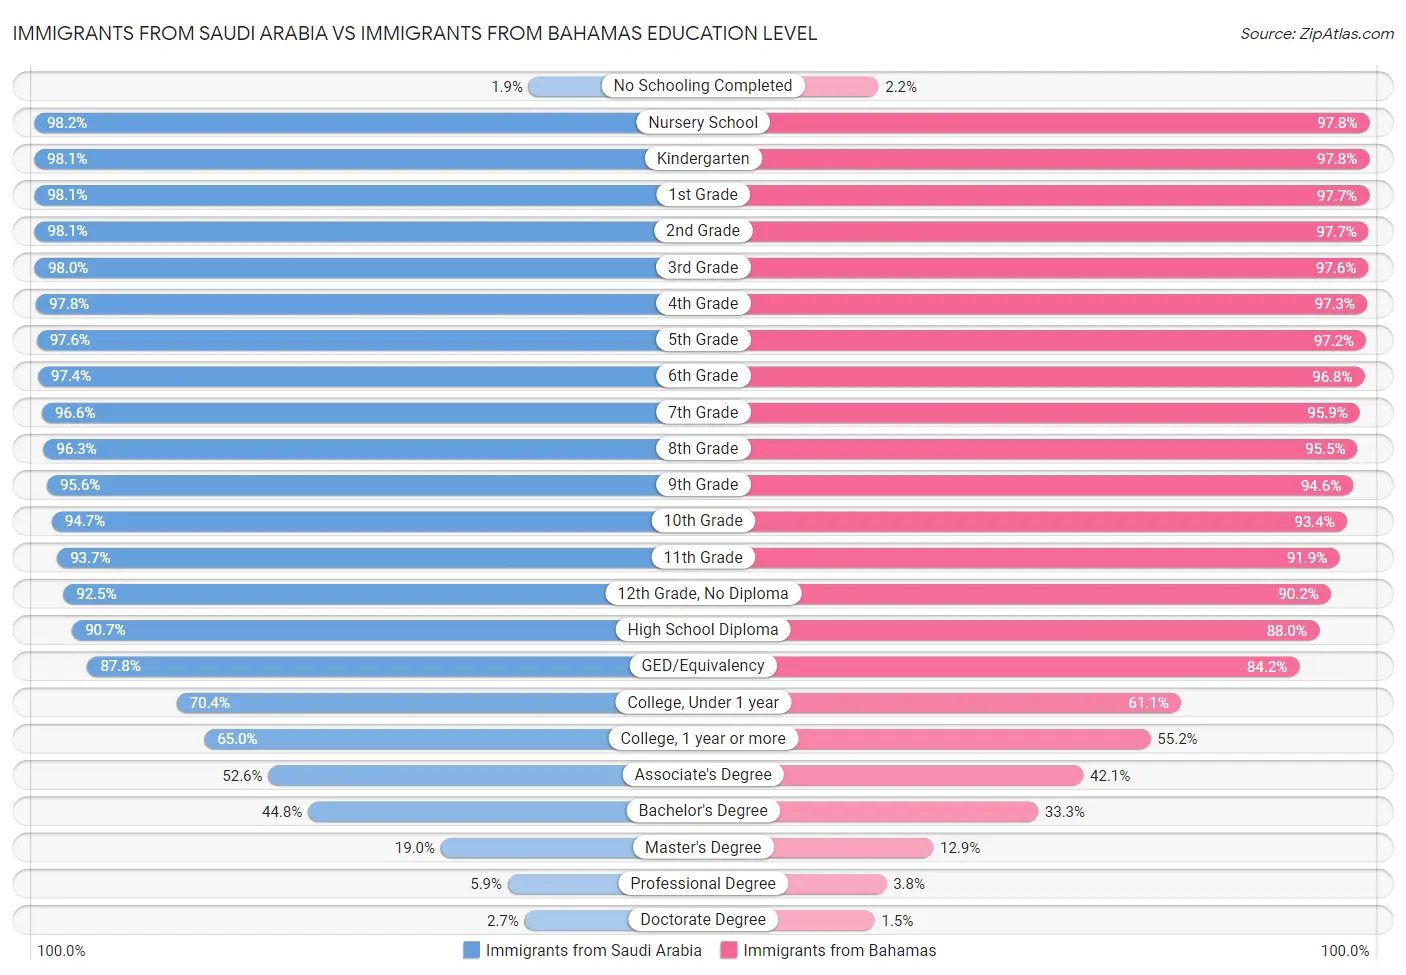 Immigrants from Saudi Arabia vs Immigrants from Bahamas Education Level